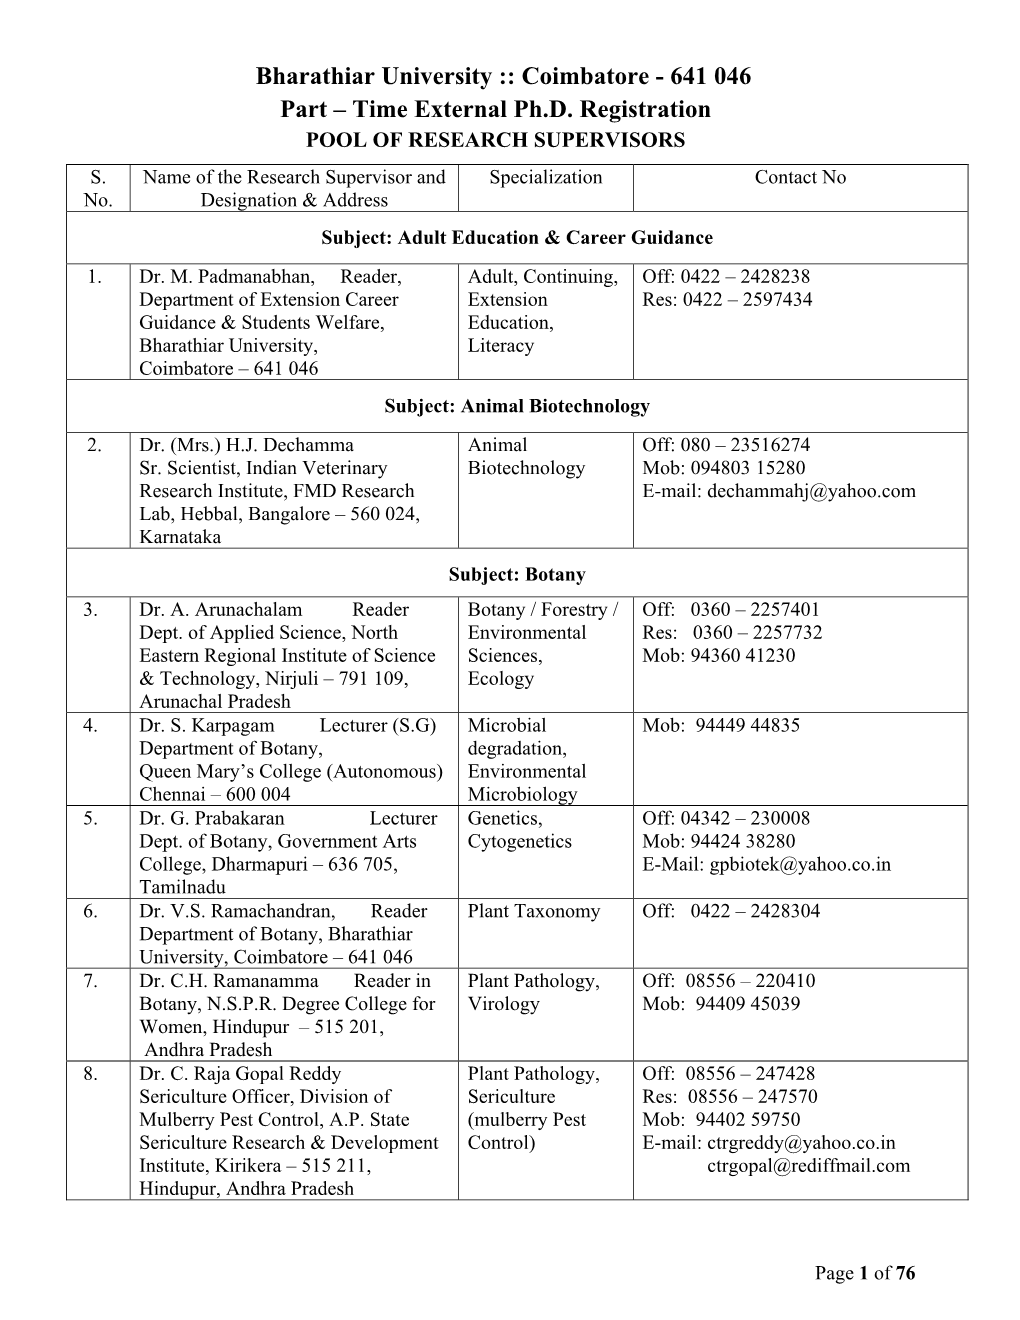 Bharathiar University :: Coimbatore - 641 046 Part – Time External Ph.D